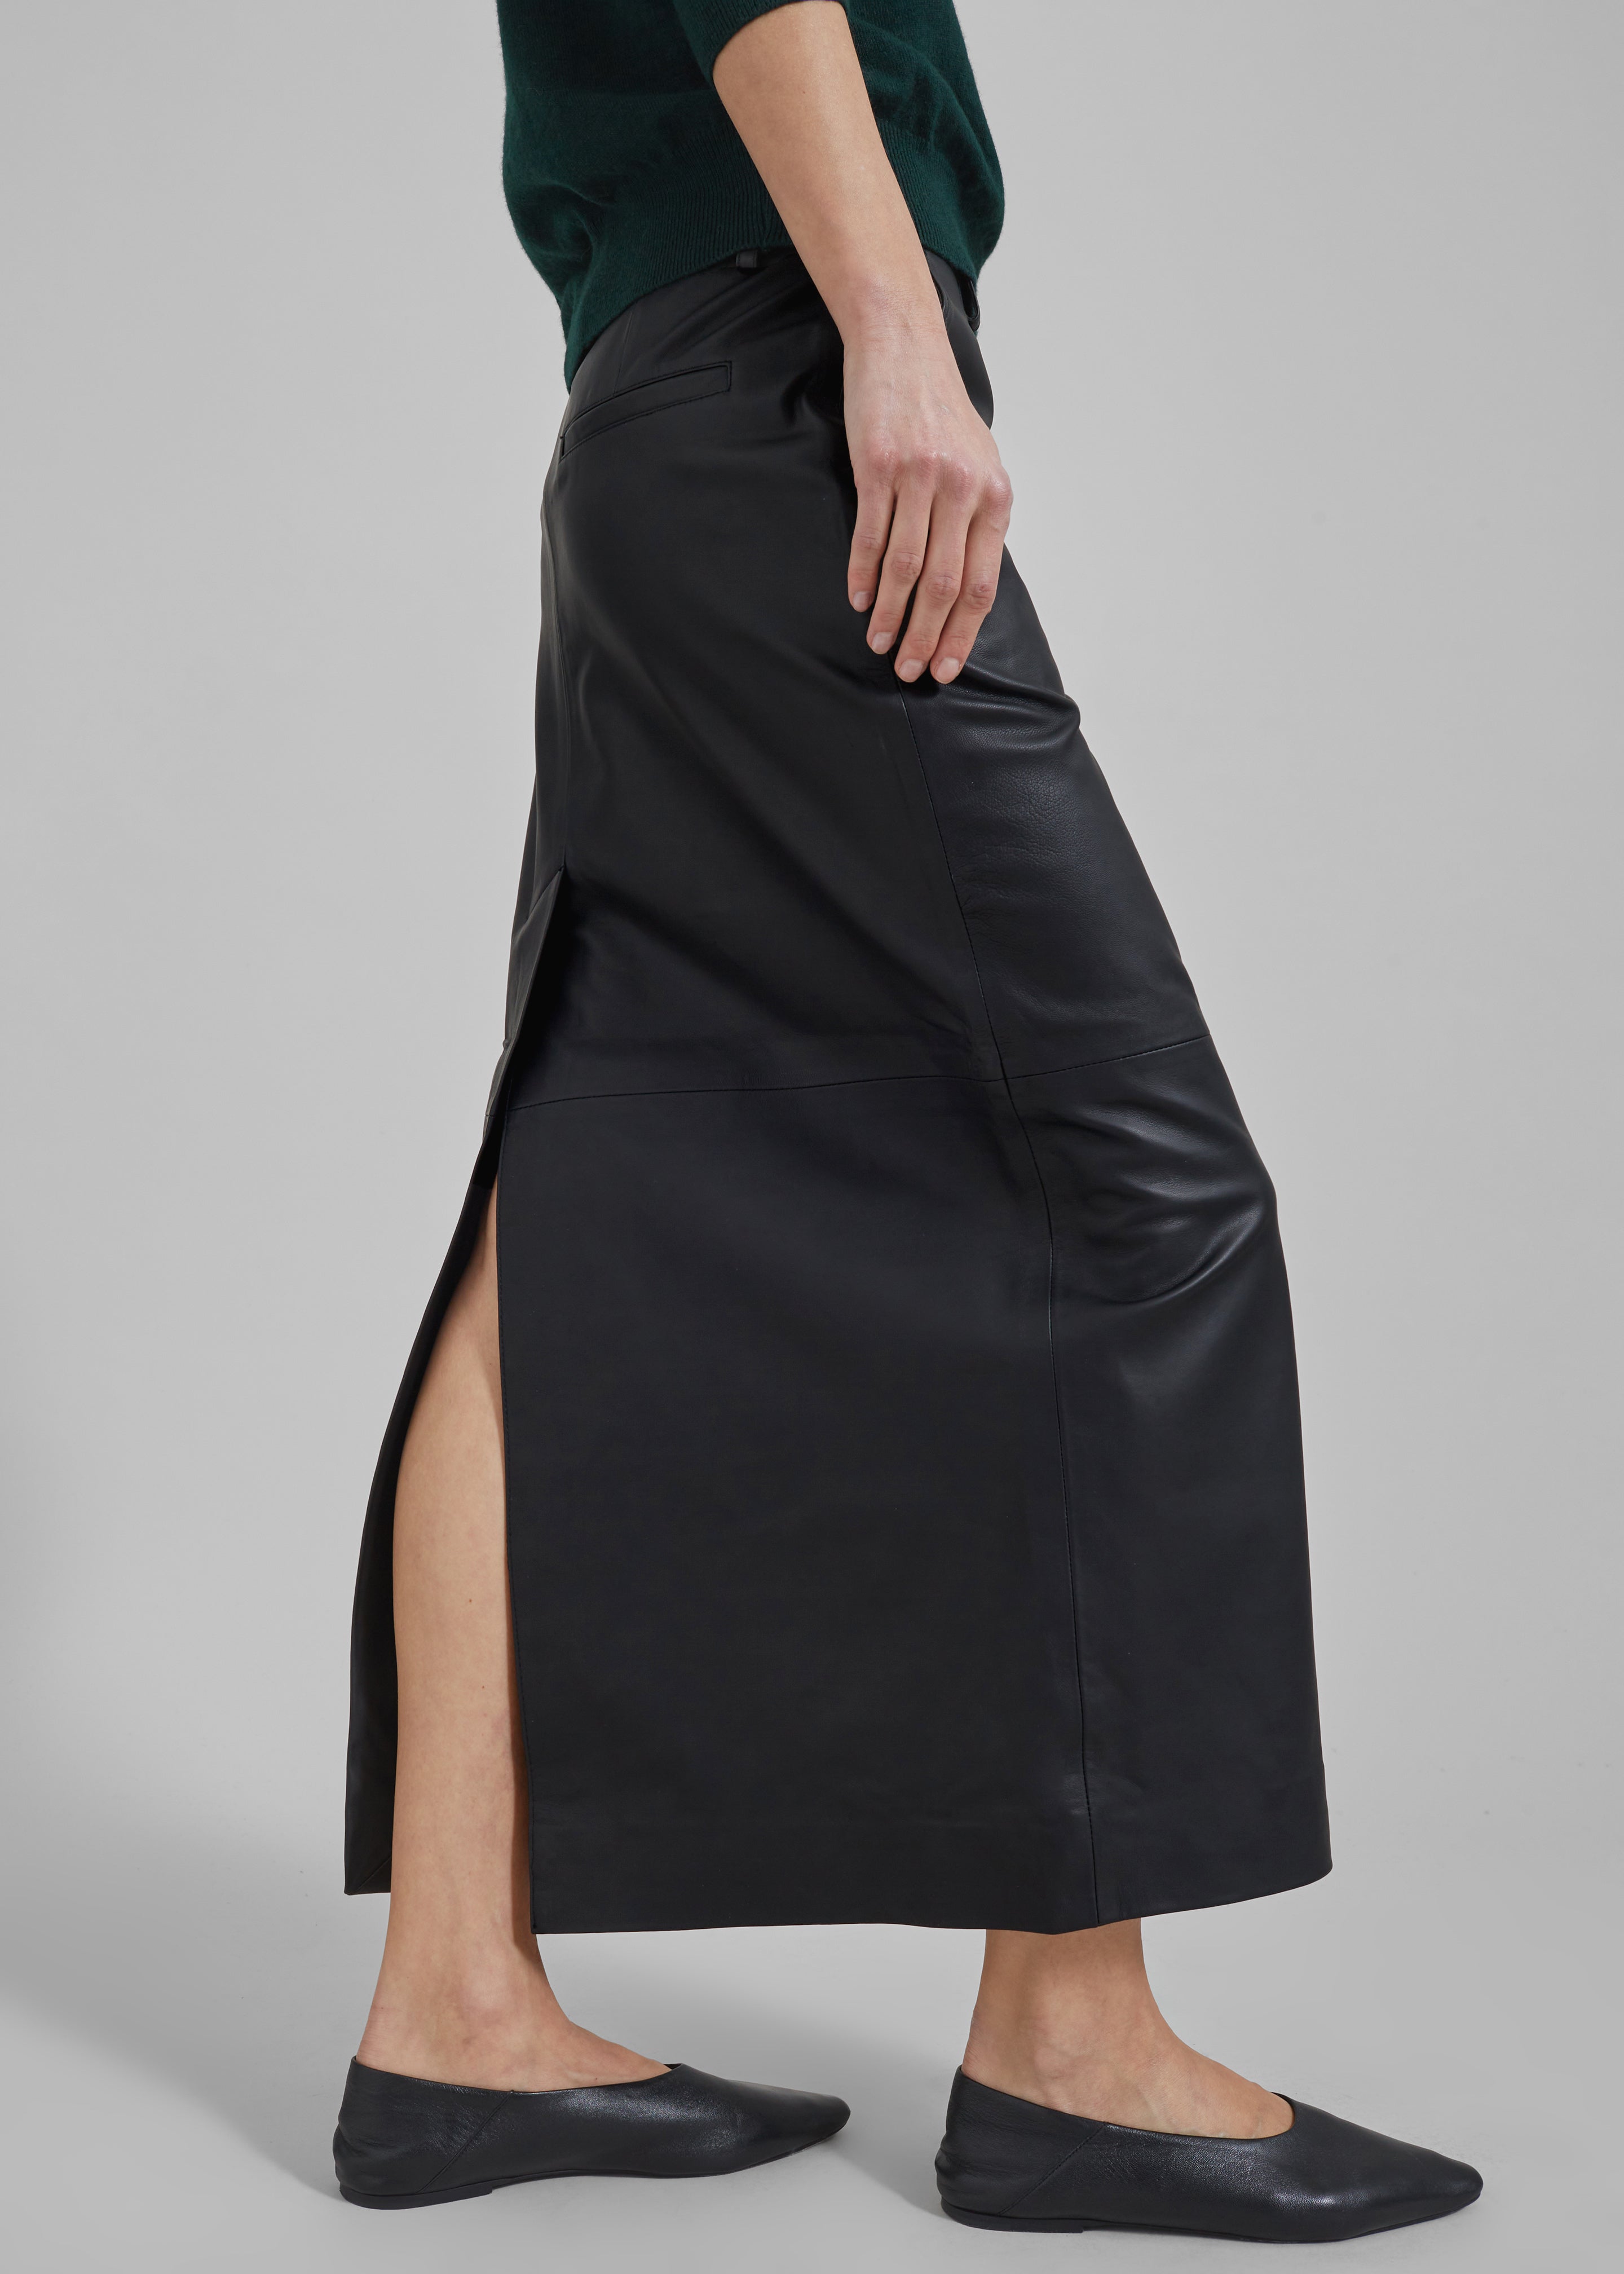 Remain Maxi Pencil Skirt - Black - 5